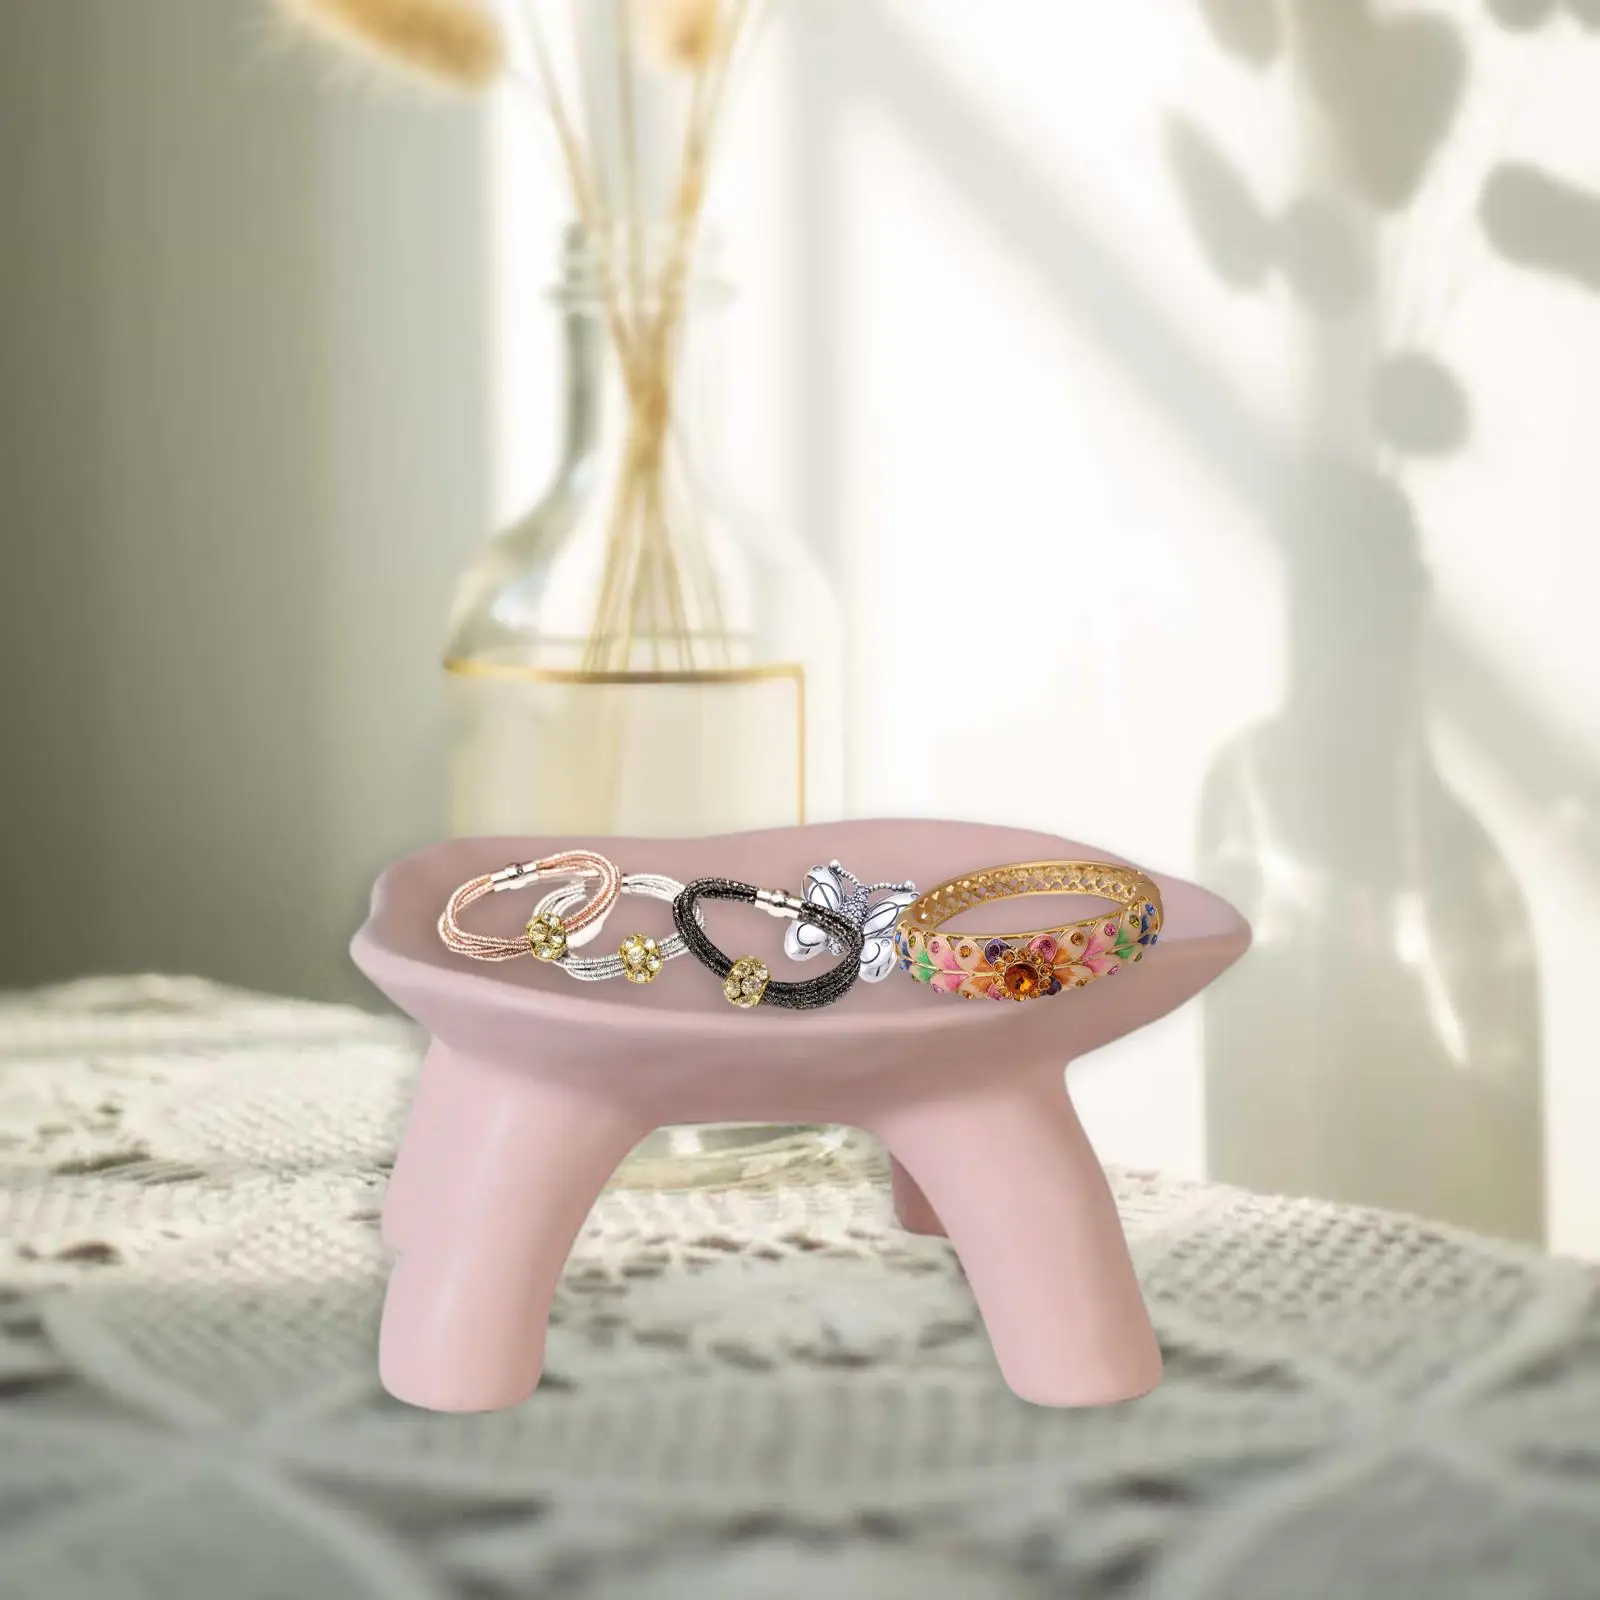 Jewelry Tray Earring Organizer Key Holder Decorative Tray Serving Tray Trinket Dish for Bathroom Countertop Home Desktop Dinner